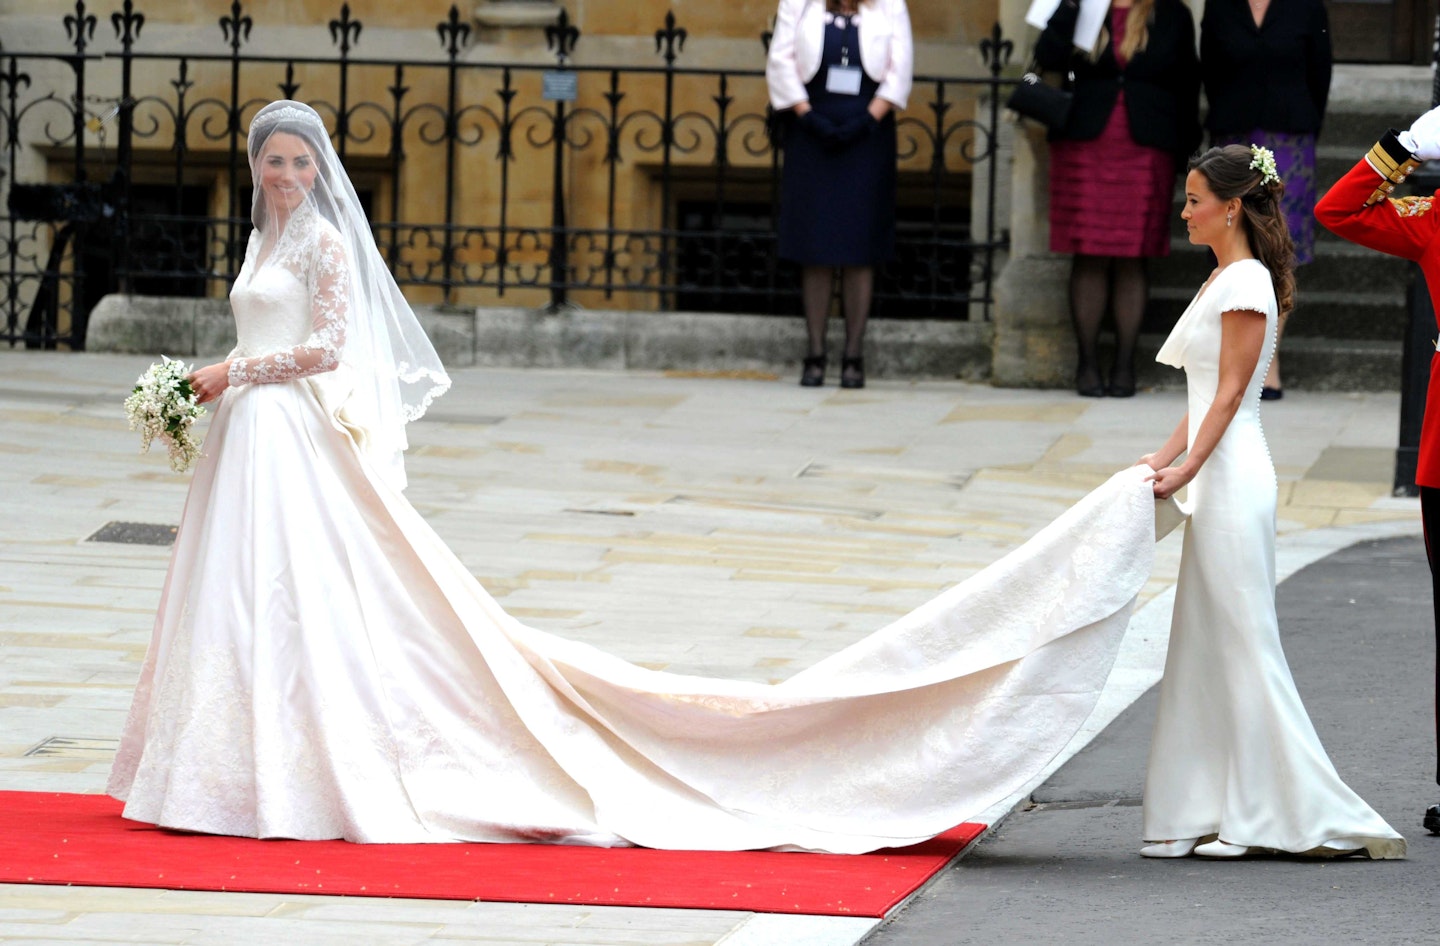 H&M Selling A Replica Of Kate Middleton's Wedding Dress For £150 | Fashion | Grazia